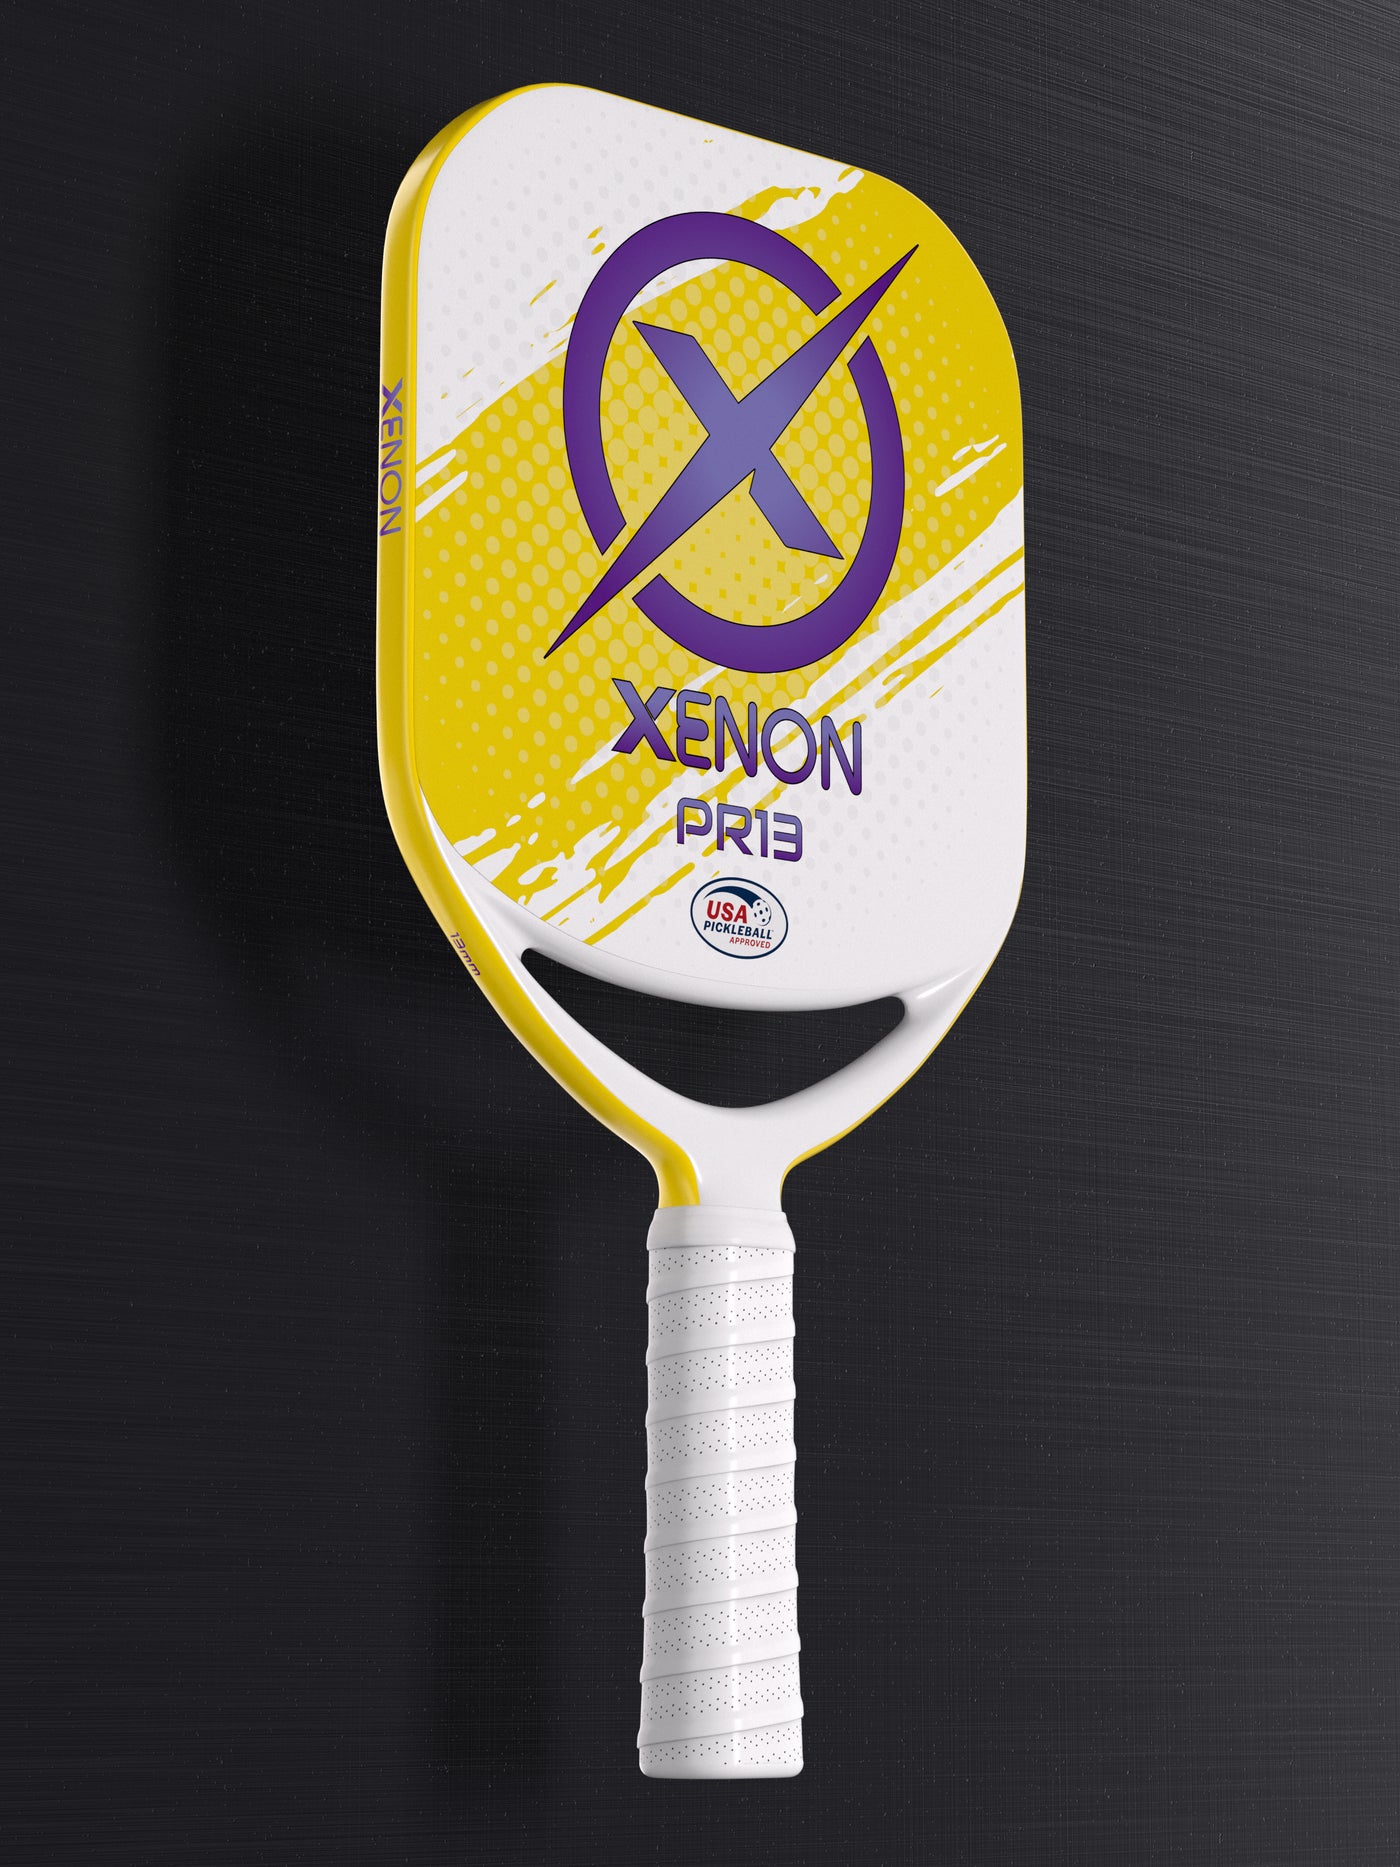 Xenon PR13 pickleball paddle